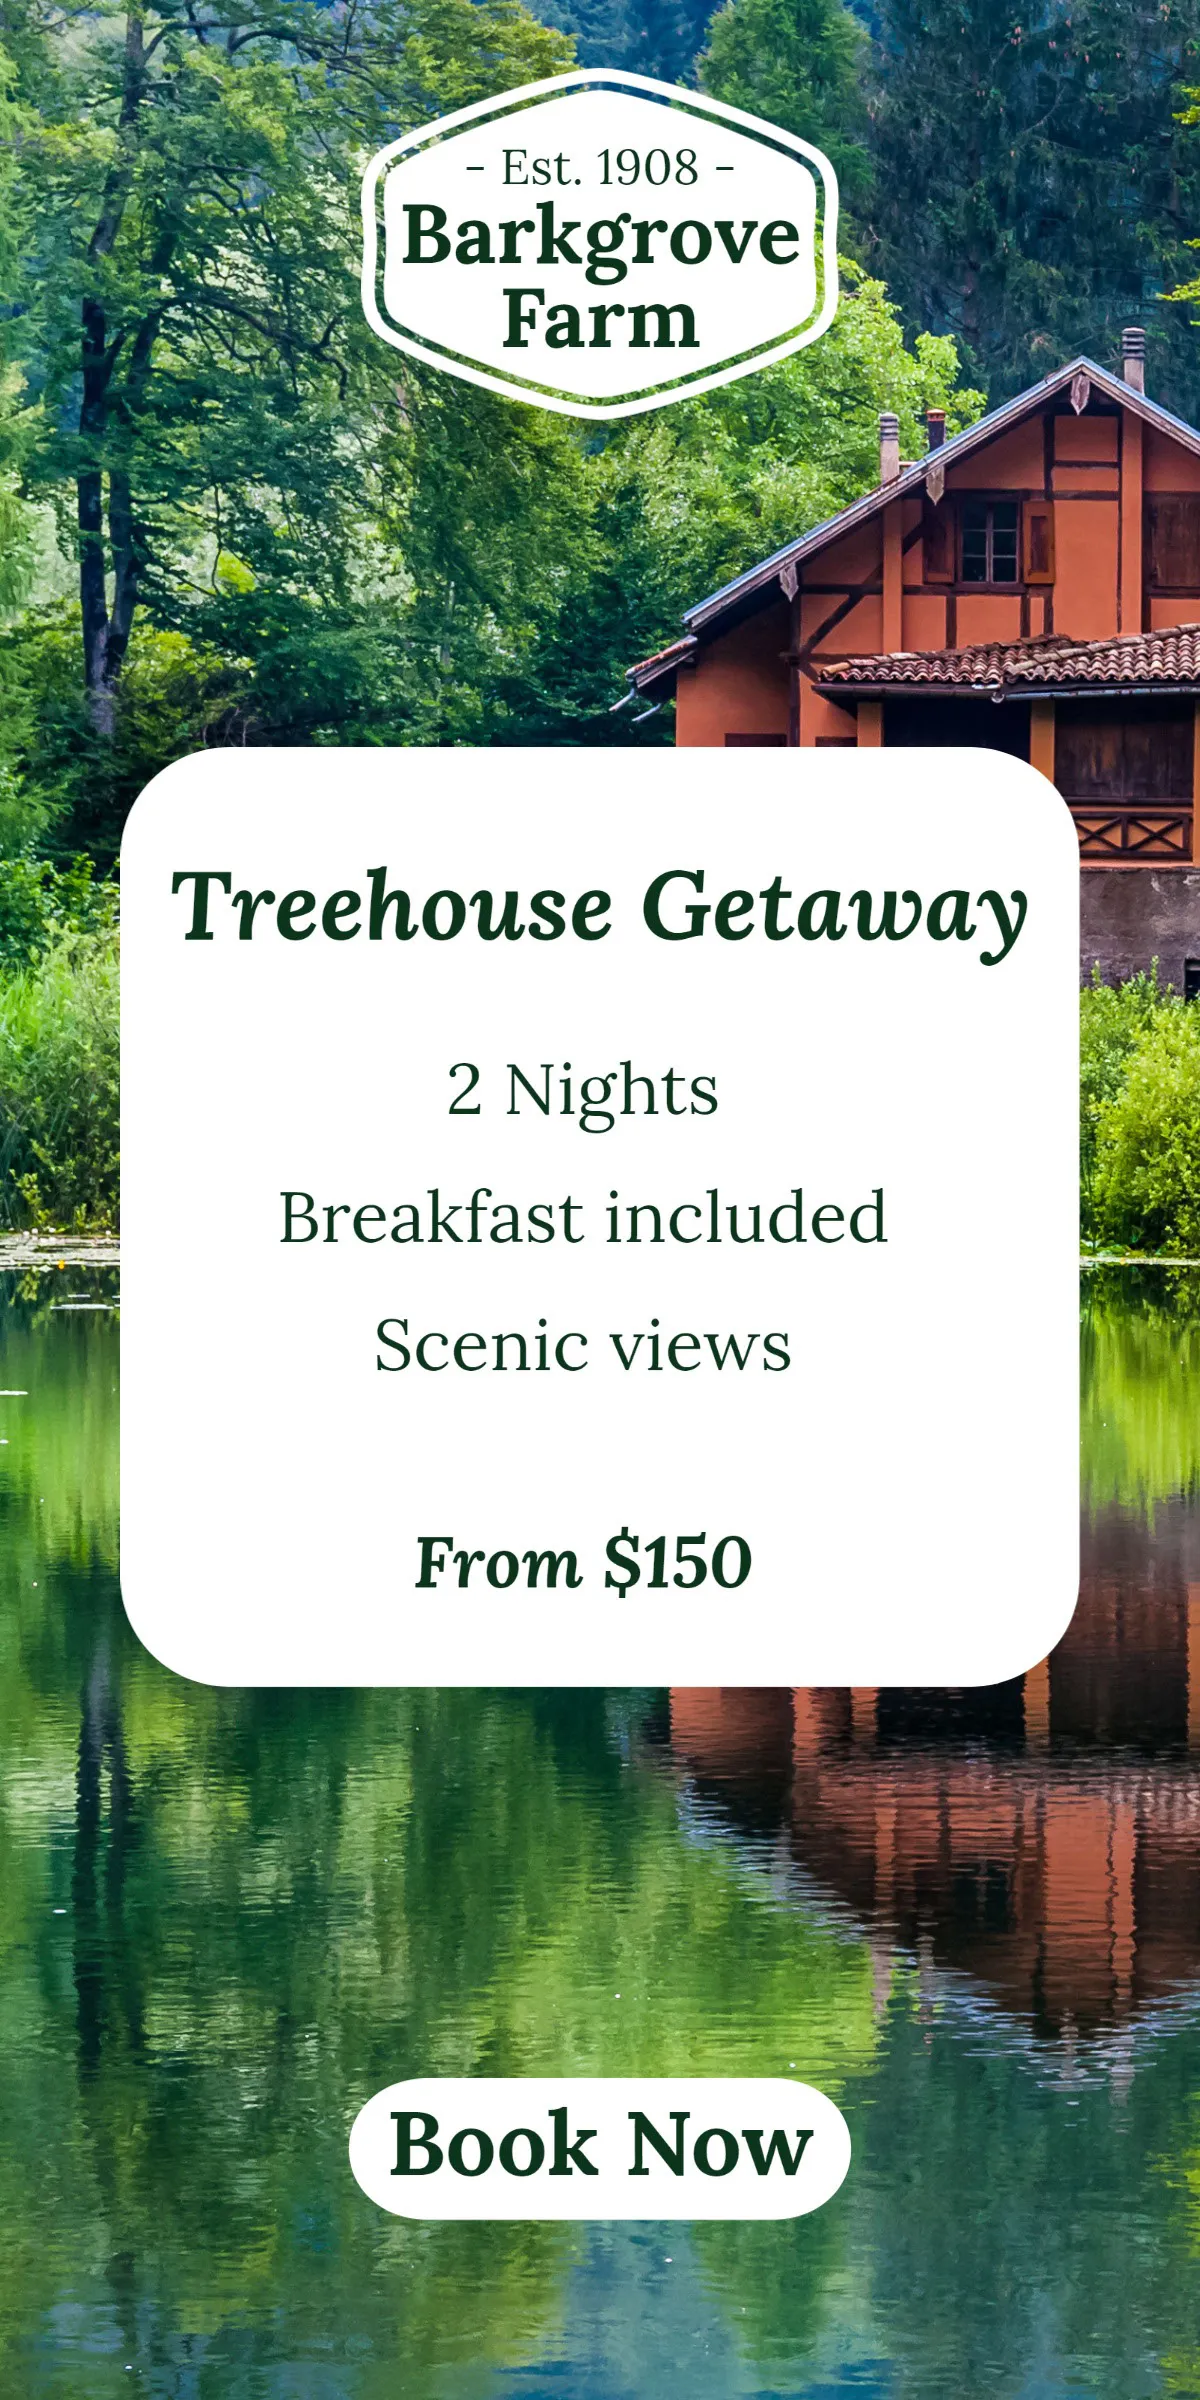 Green & White Treehouse getaway Photo Web Banner